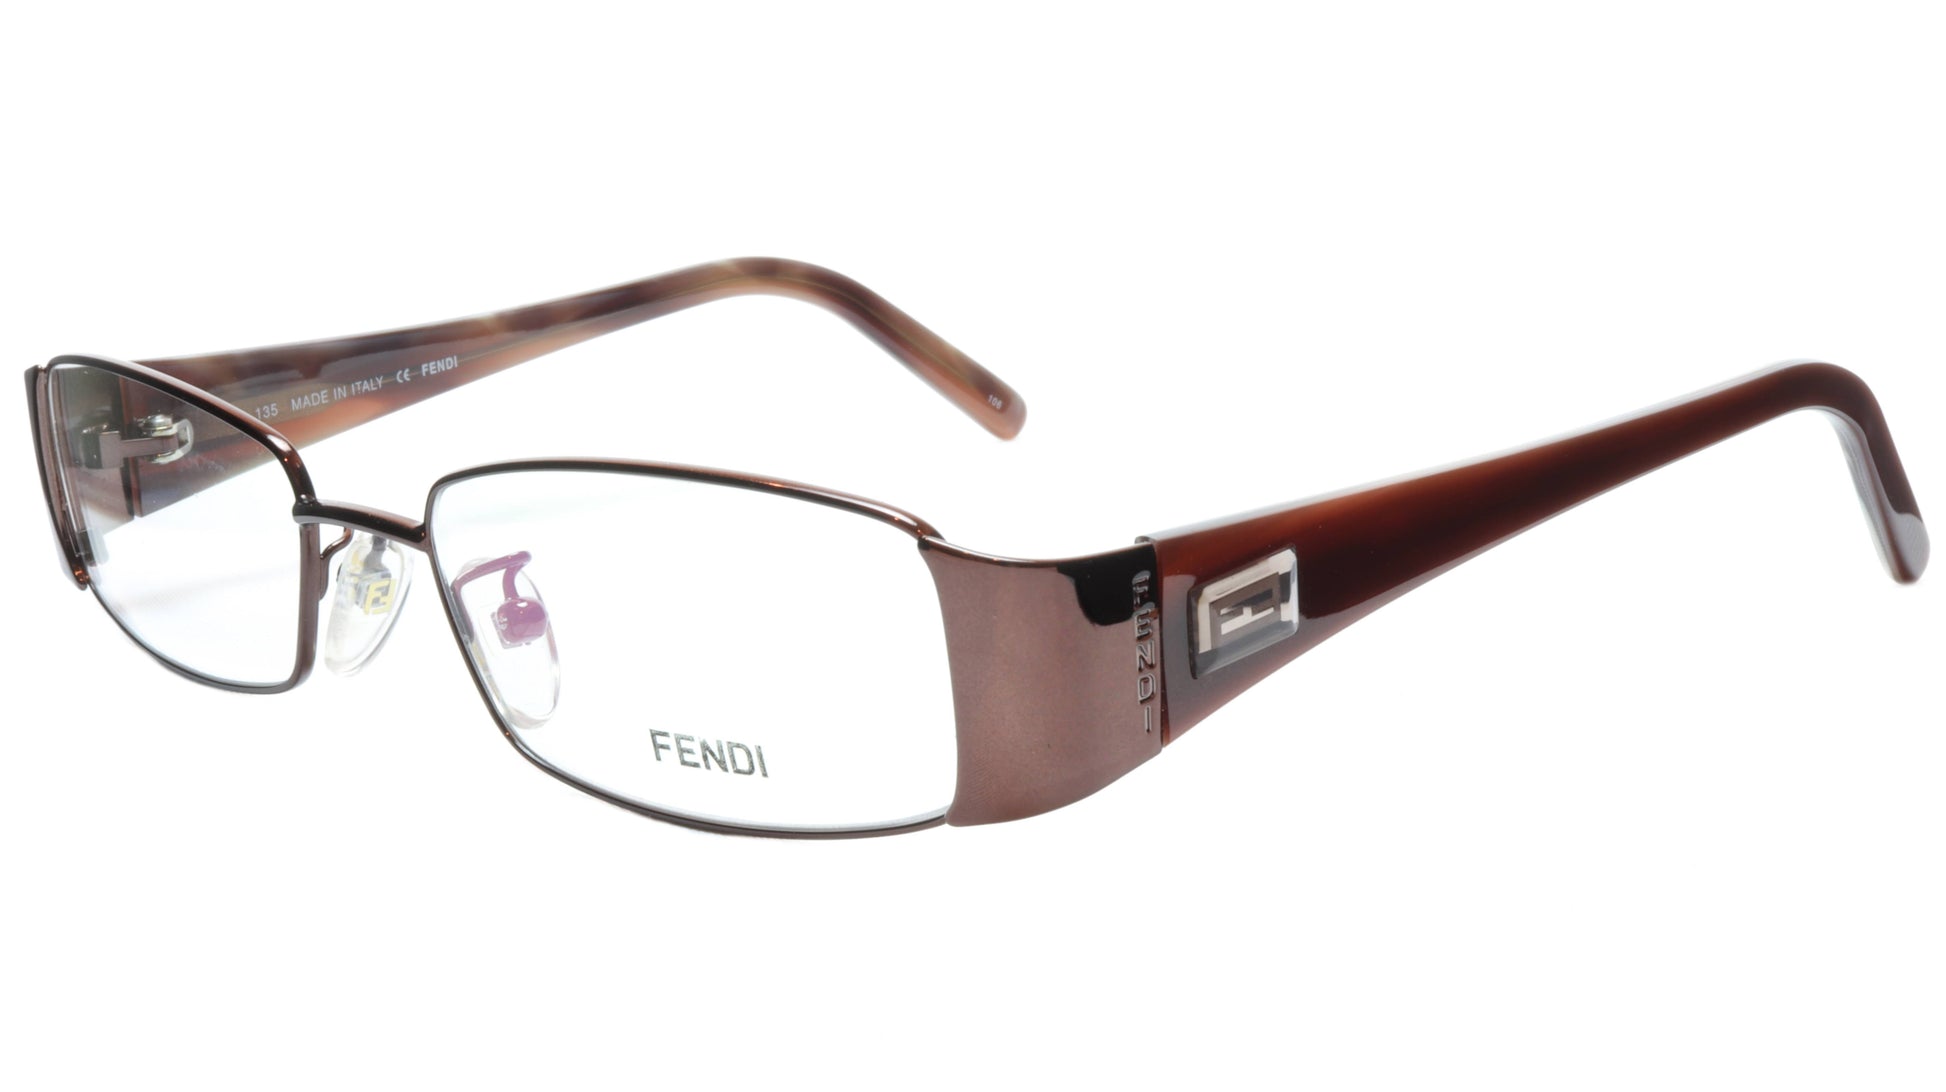 FENDI Eyeglasses Frame F892 (212) Metal Acetate Bronze Italy Made 52-17-135, 28 - Frame Bay